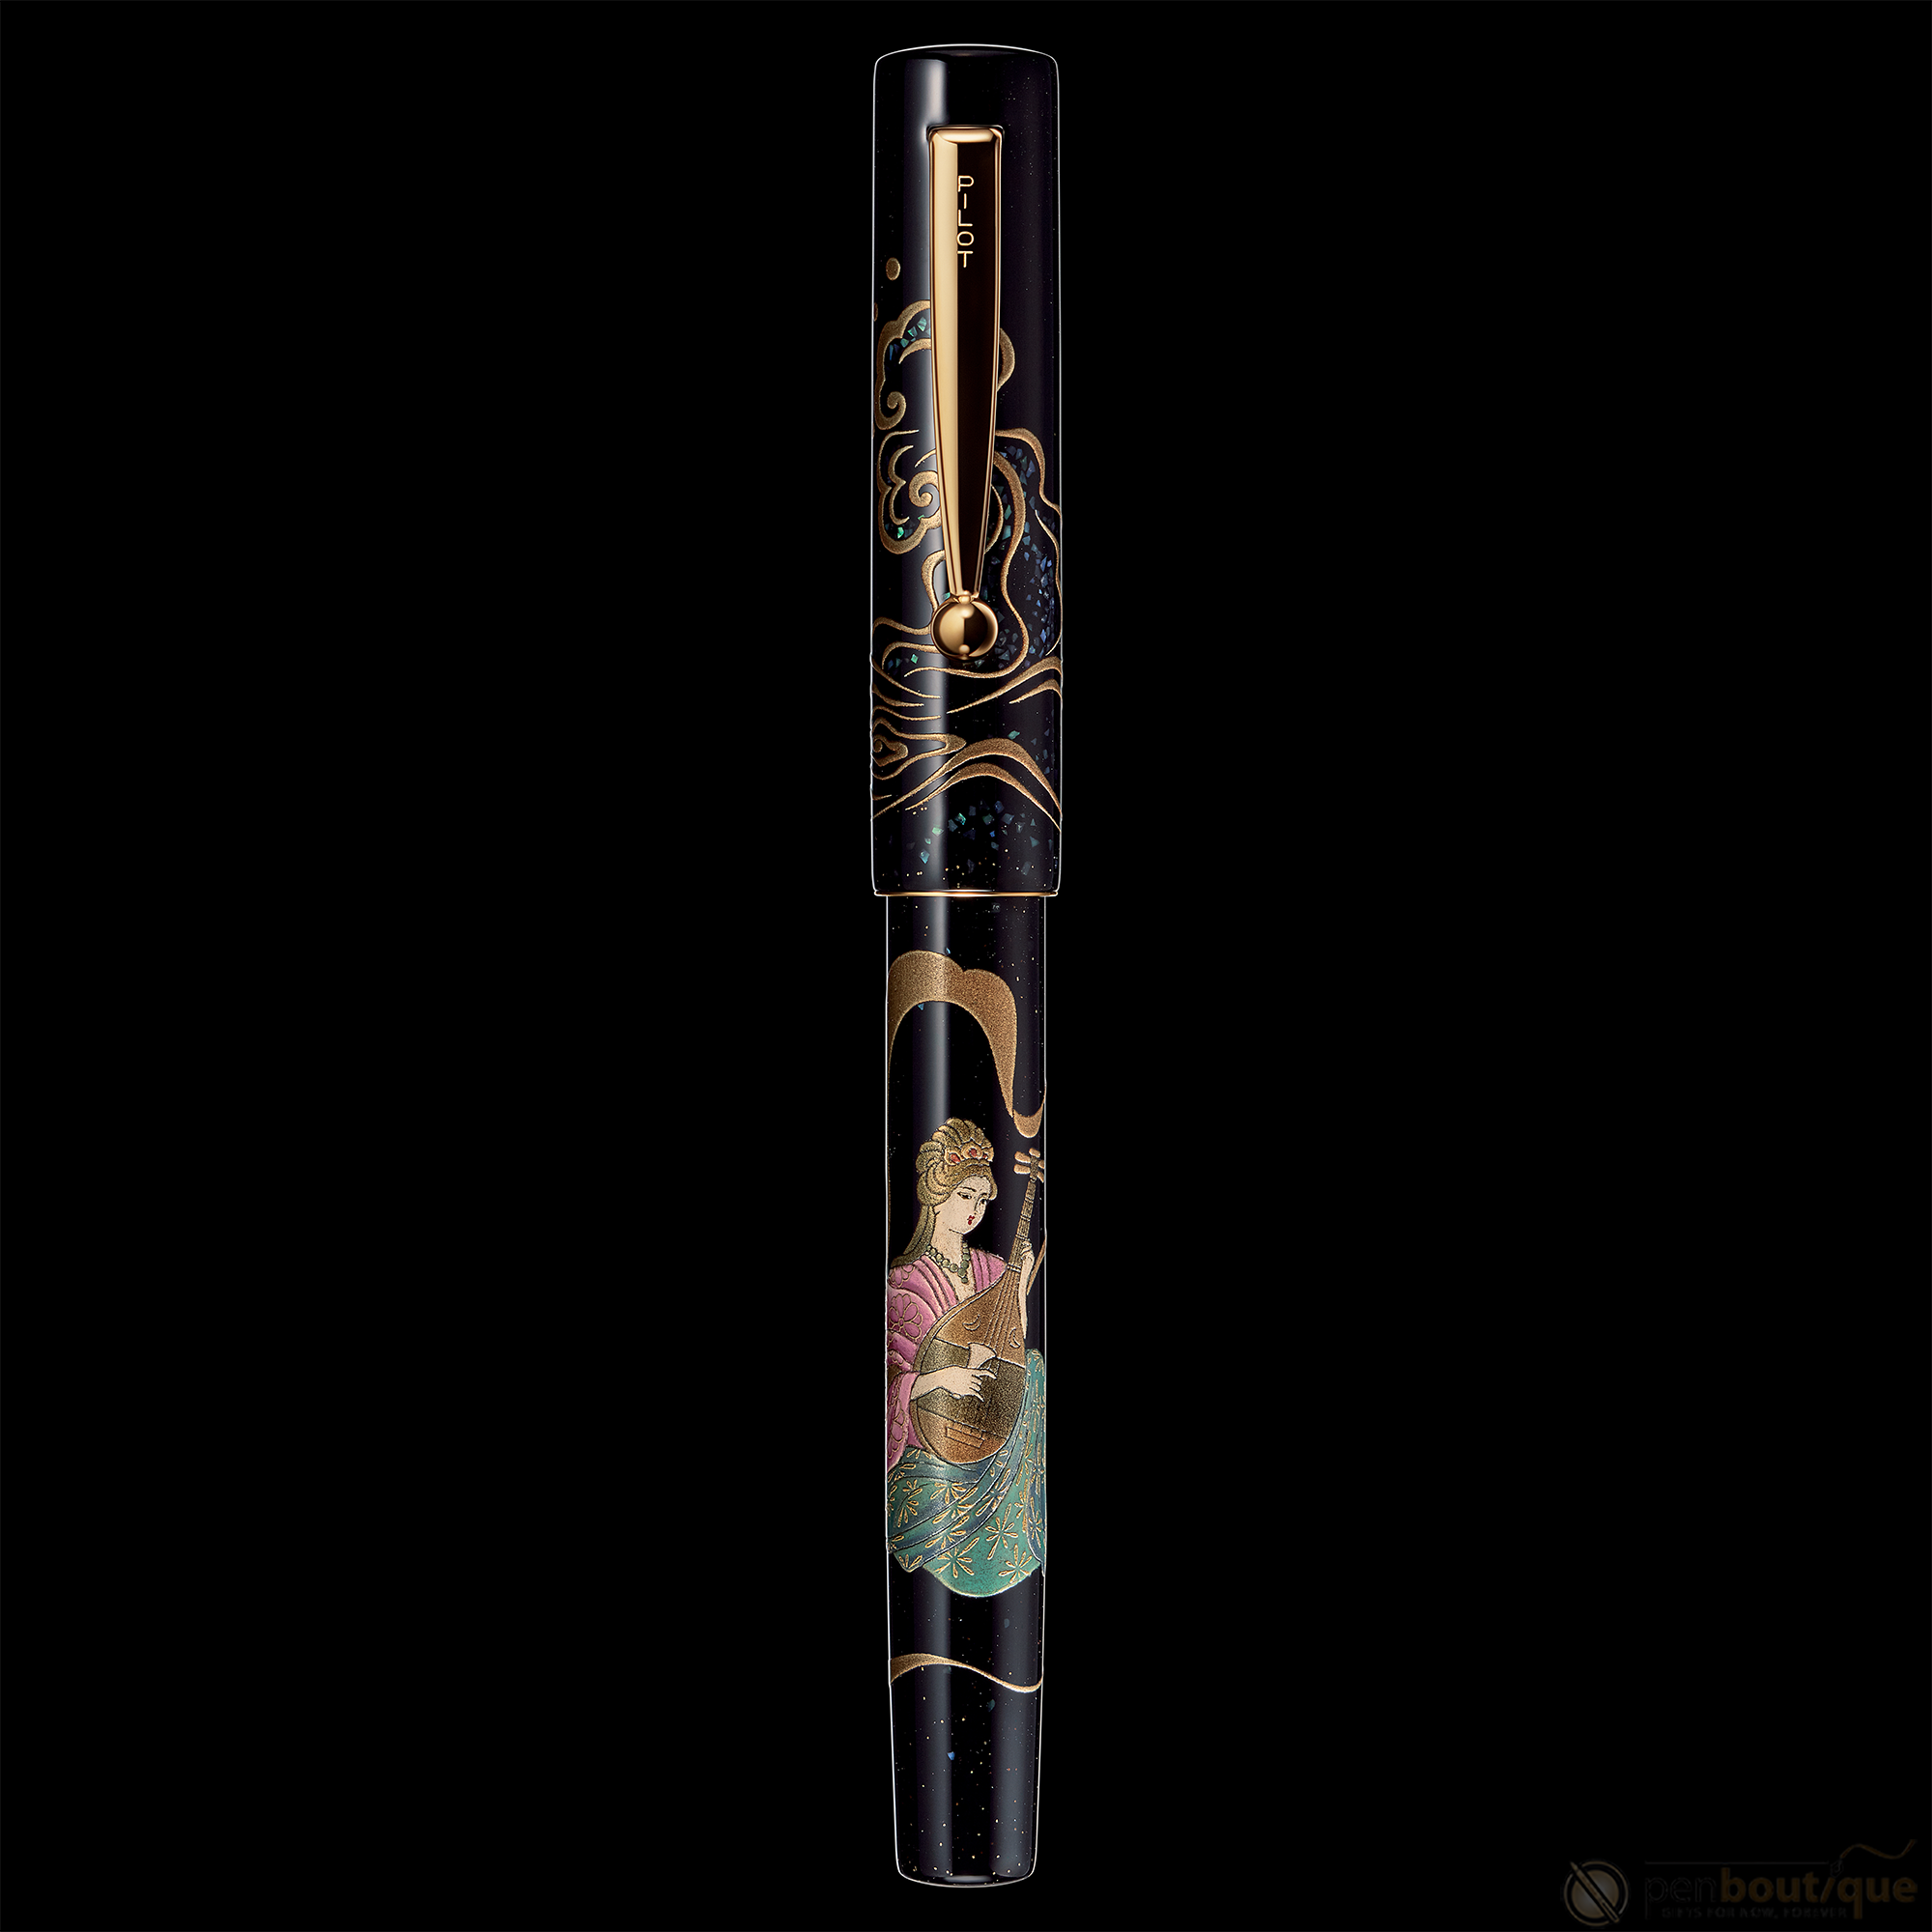 Namiki Seven Gods of Good Fortune Fountain Pen - Limited Edition - Benzaiten-Pen Boutique Ltd